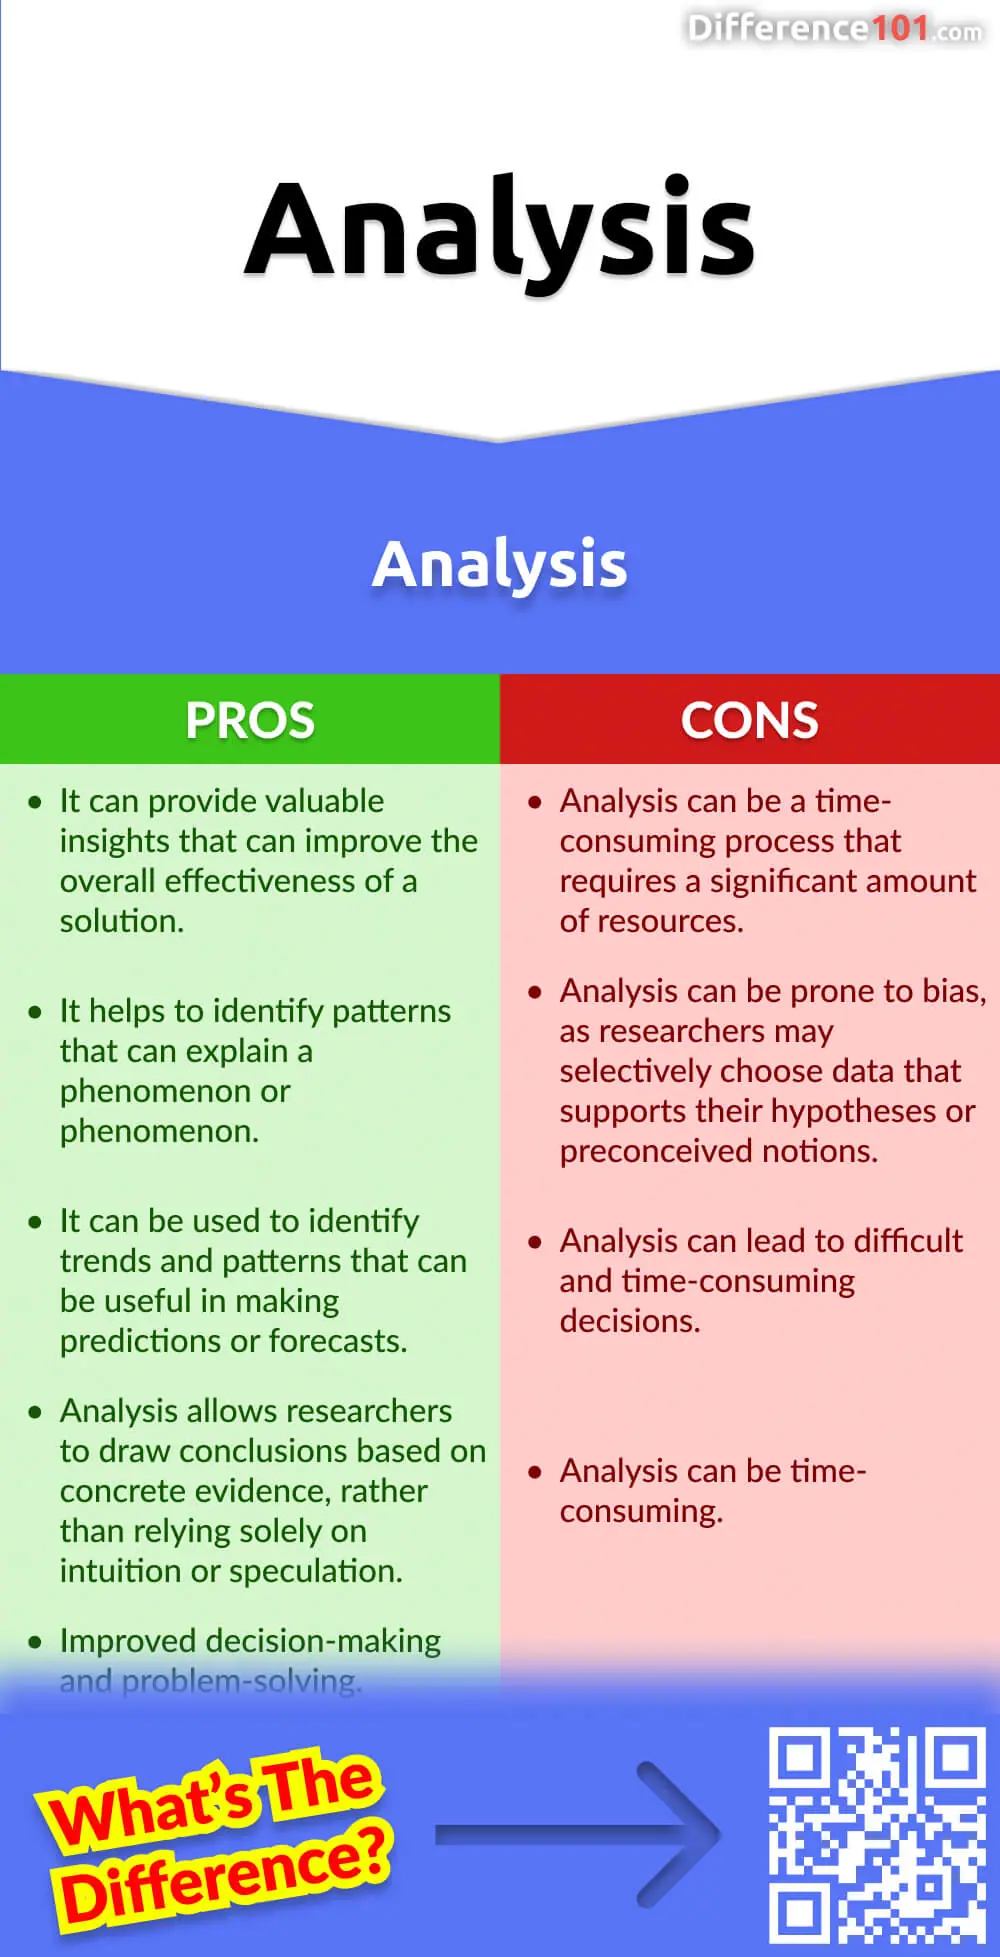 Analysis vs Analyses – Pick The Correct Word